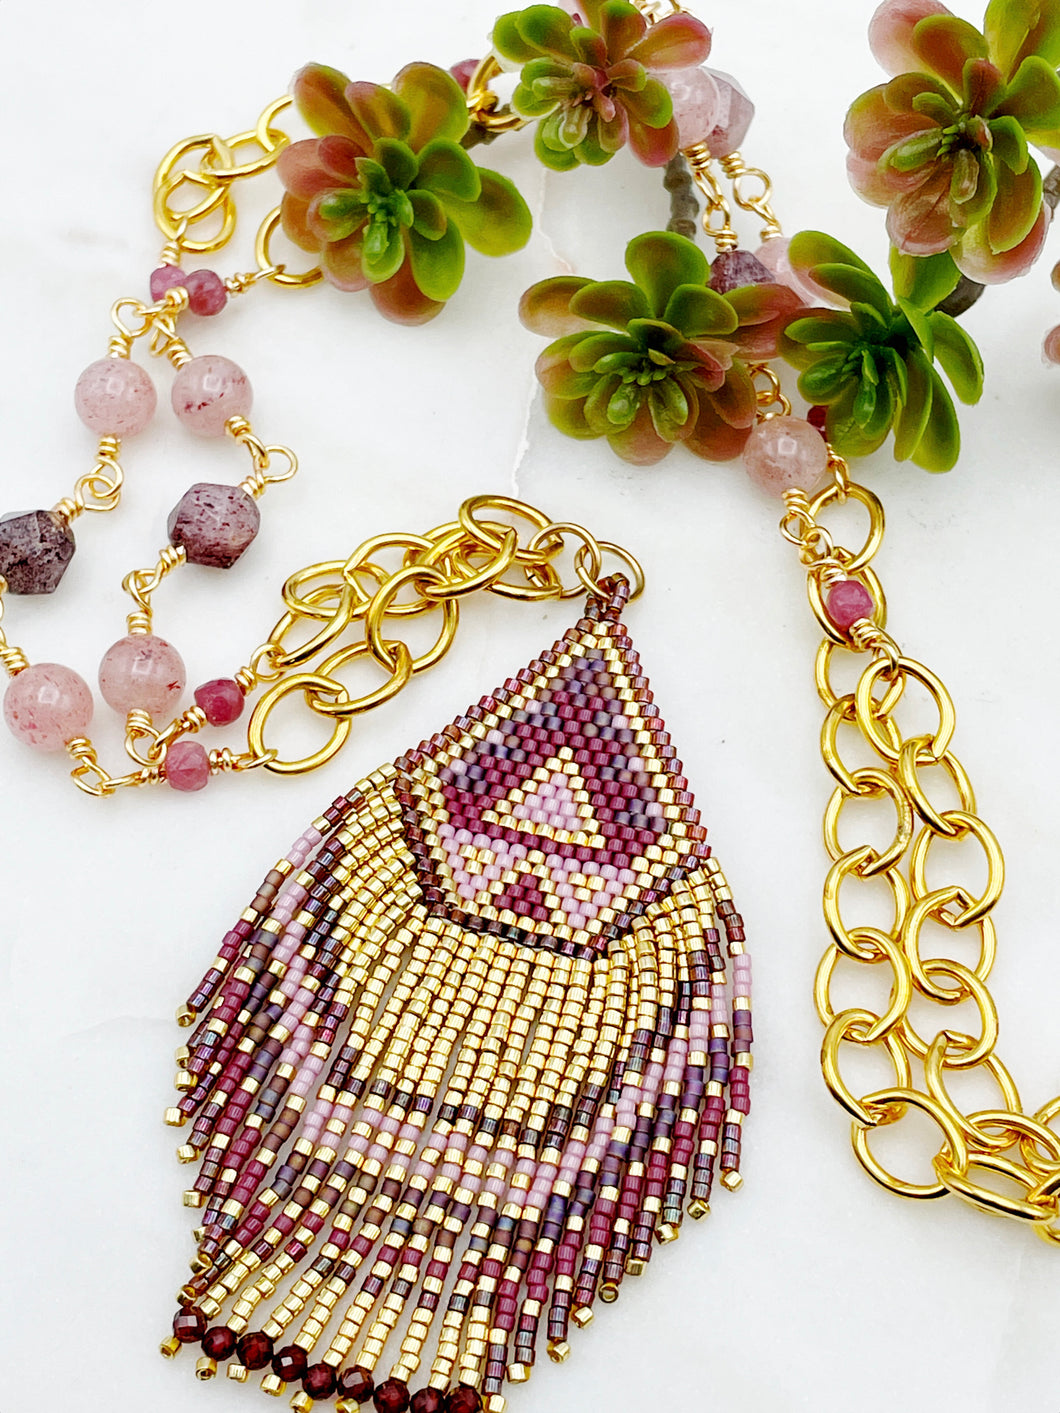 Amara Beaded Necklaces Bracelet and Earrings